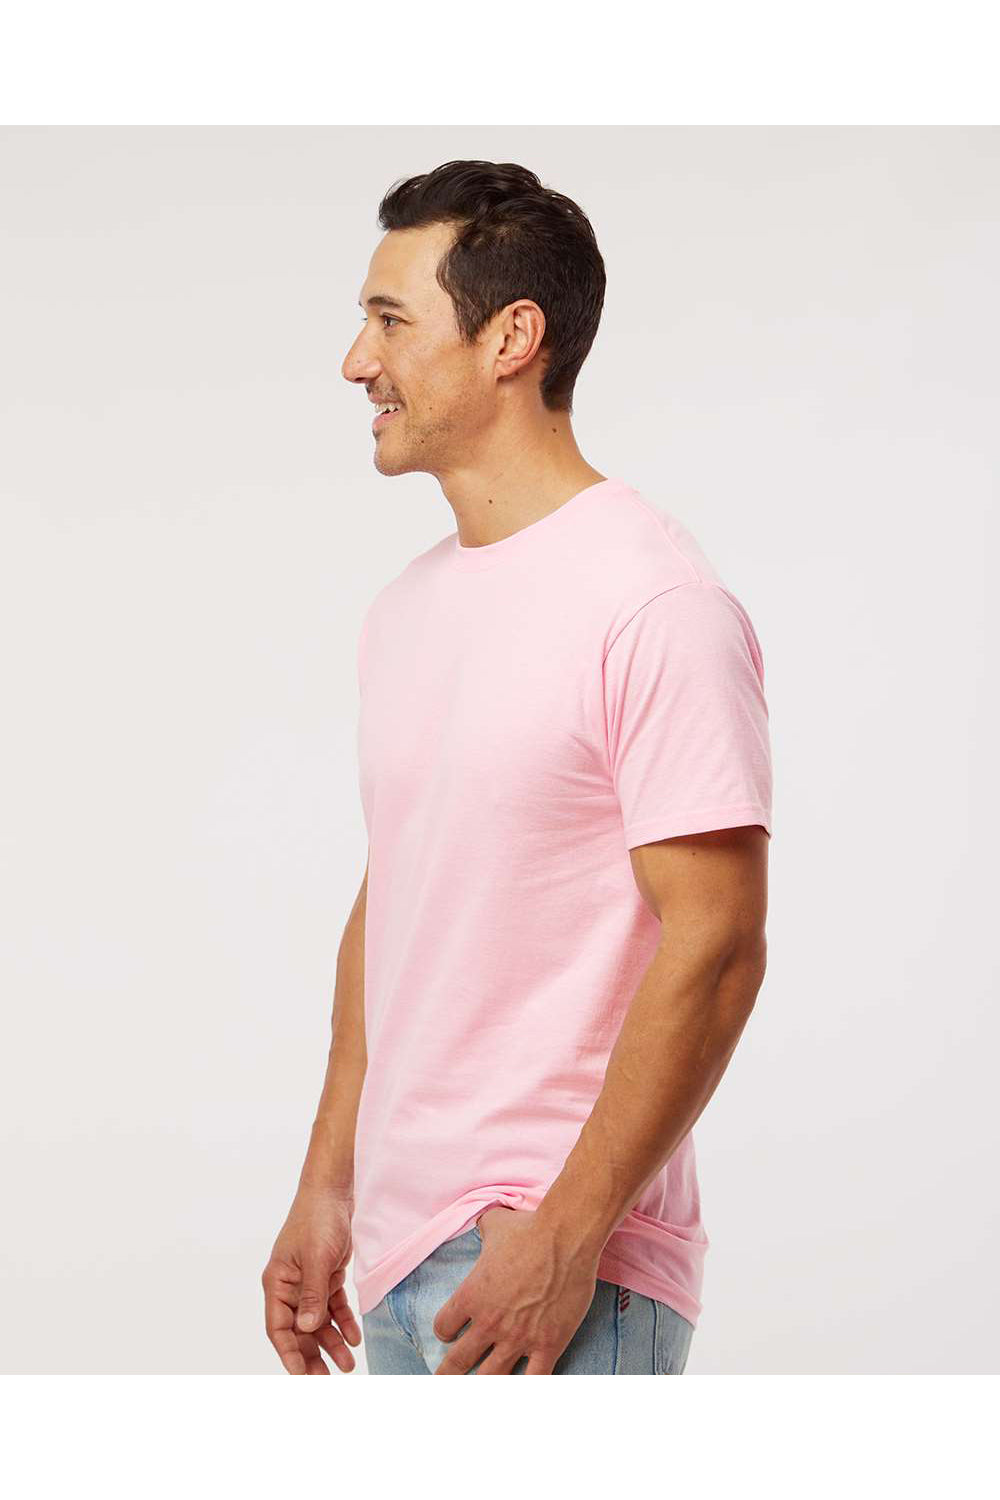 M&O 4800 Mens Gold Soft Touch Short Sleeve Crewneck T-Shirt Light Pink Model Side